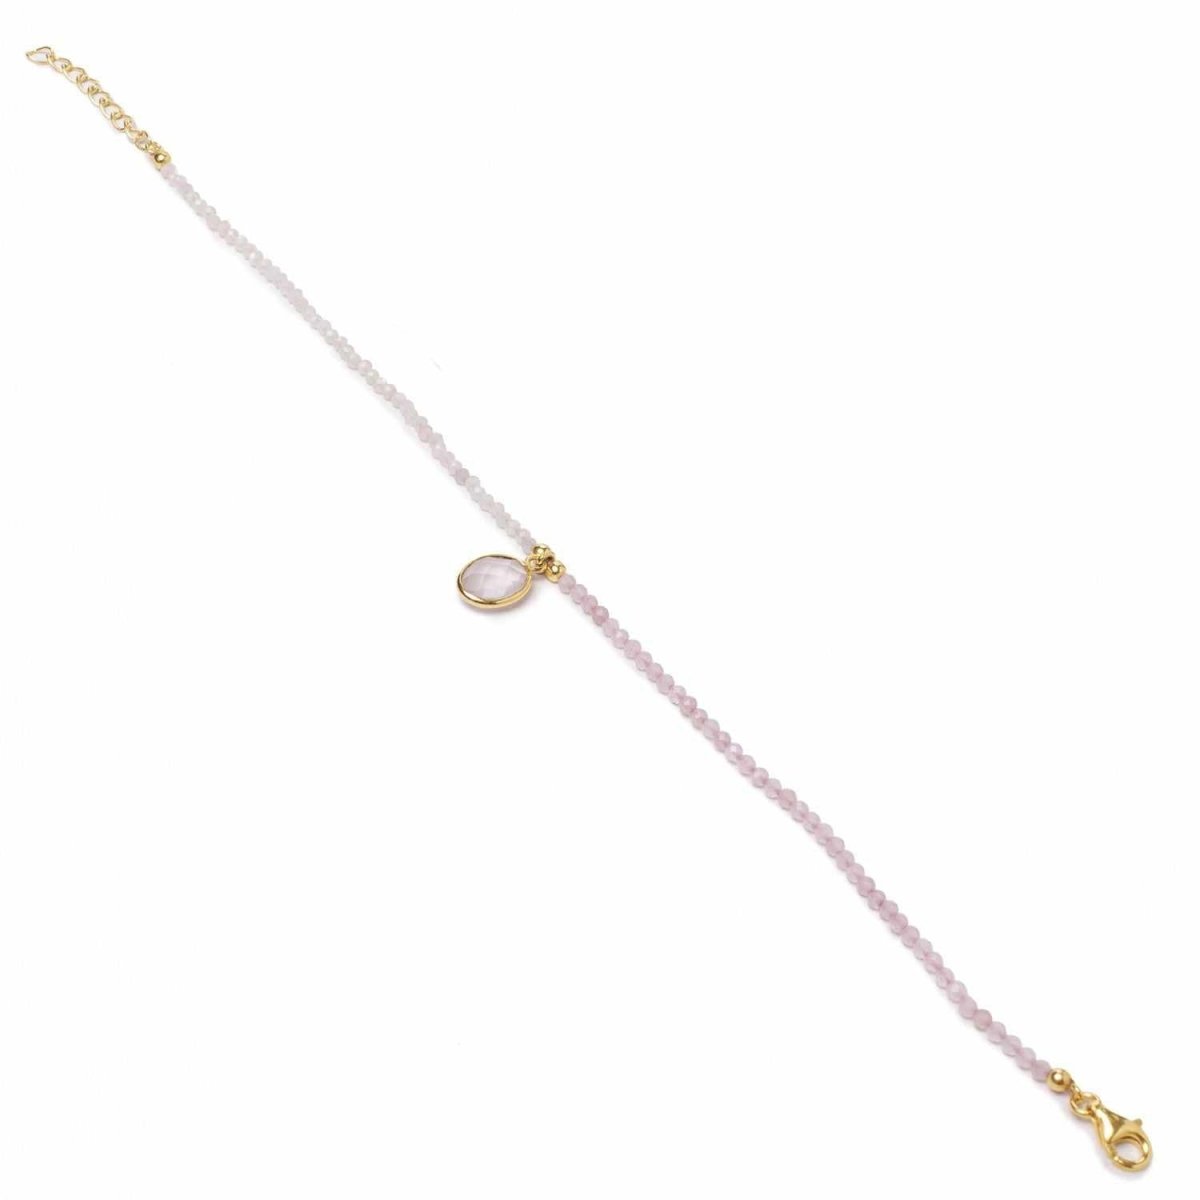 Bracelet - Bead bracelet with central rose quartz charm